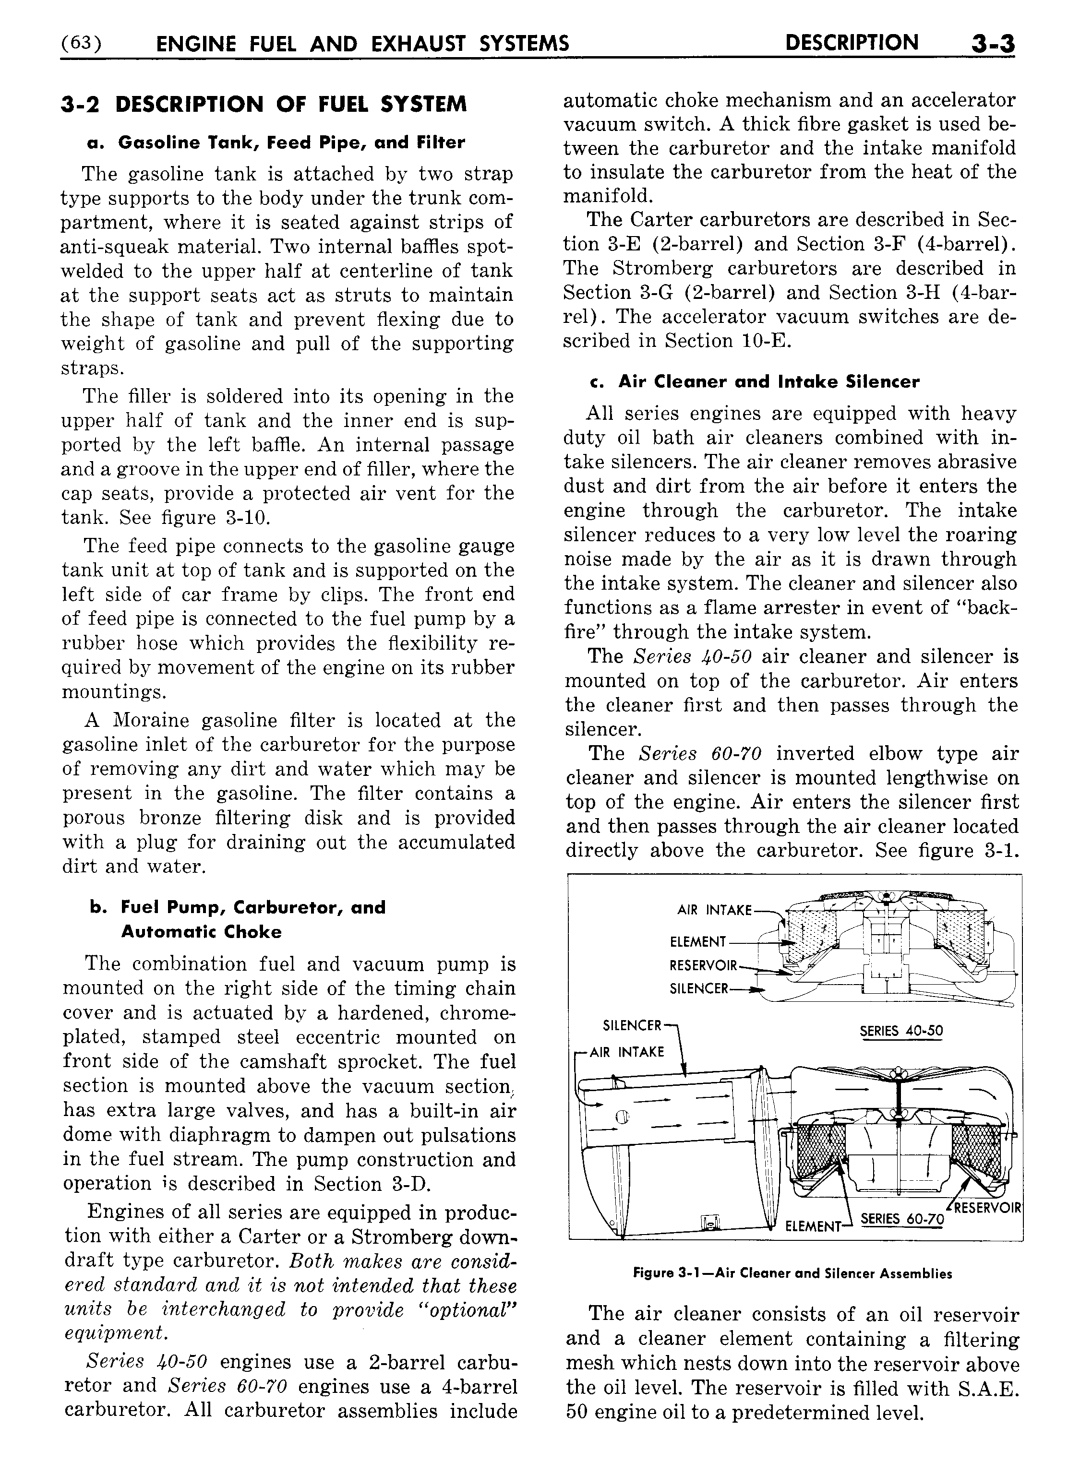 n_04 1954 Buick Shop Manual - Engine Fuel & Exhaust-003-003.jpg